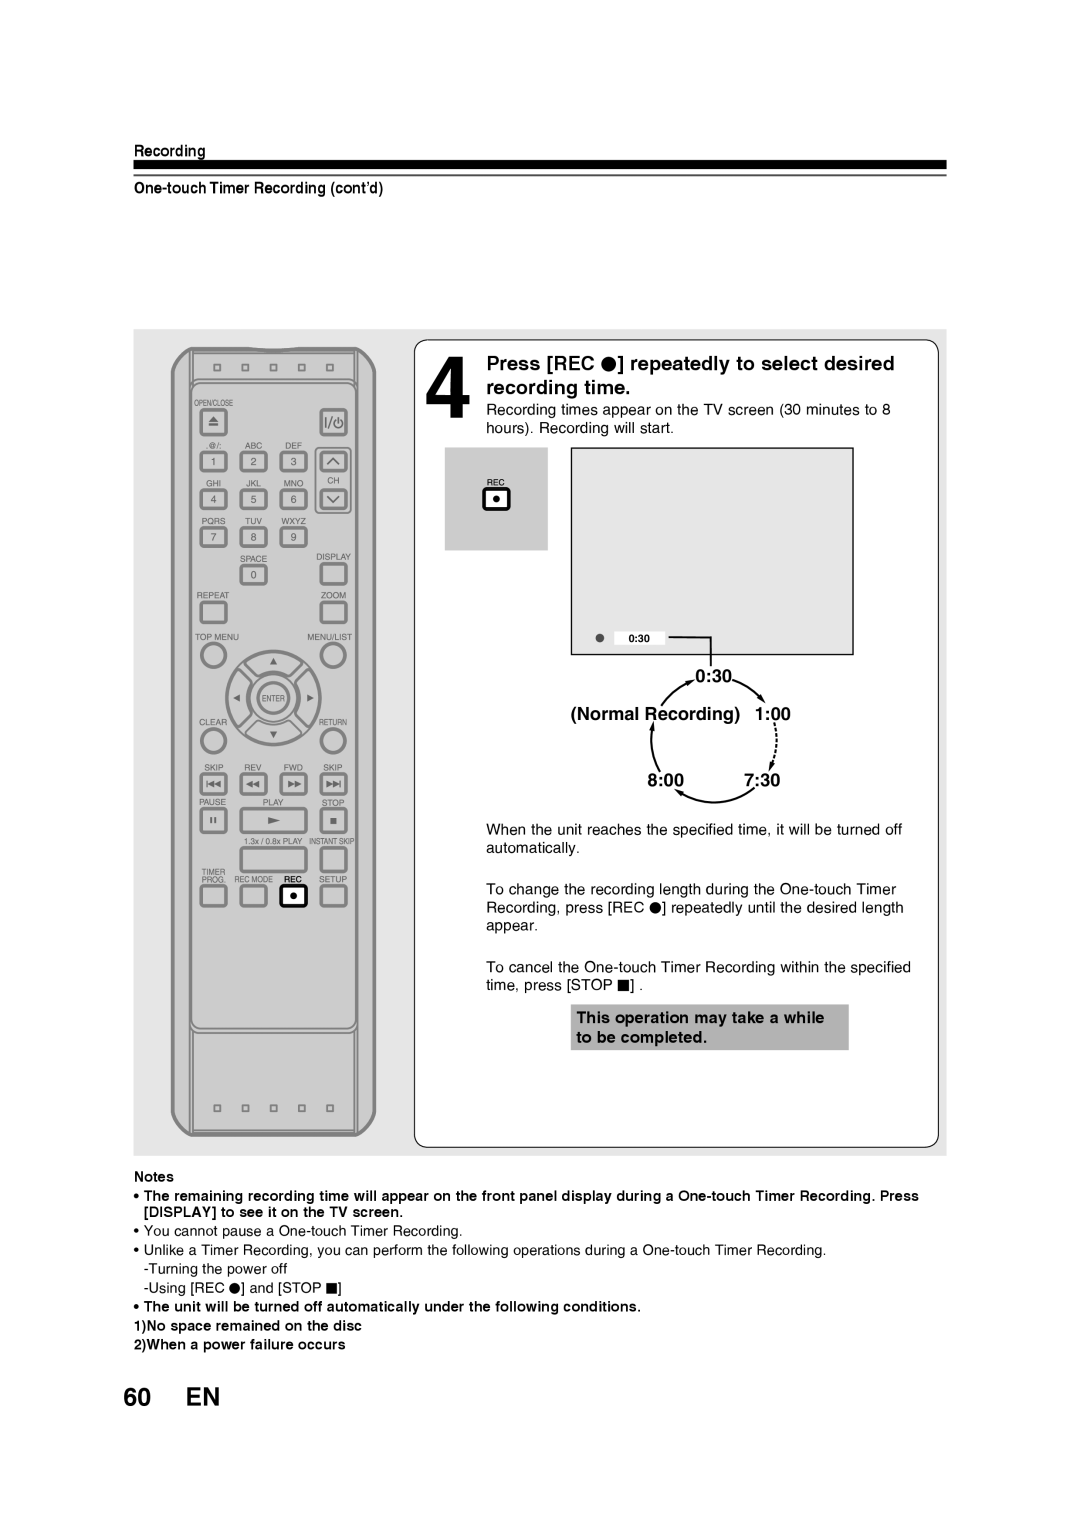 Toshiba D-RW2SU/D-RW2SC manual 60 EN, Press REC I repeatedly to select desired recording time, Normal Recording 800 